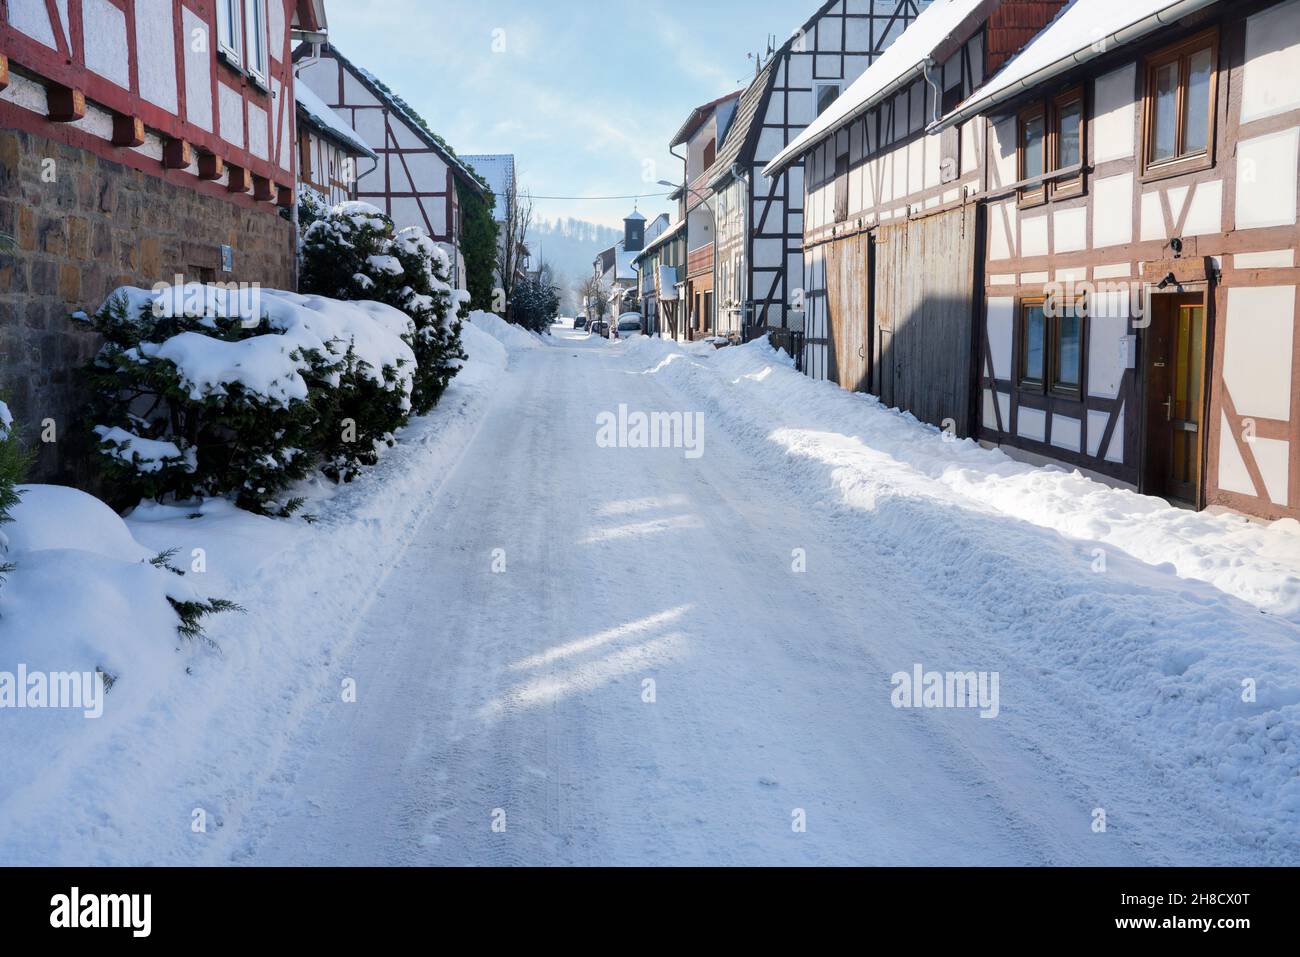 Waldensian village of Gewissenruh in winter, Wesertal, Weser Uplands, Weserbergland, Hesse, Germany Stock Photo